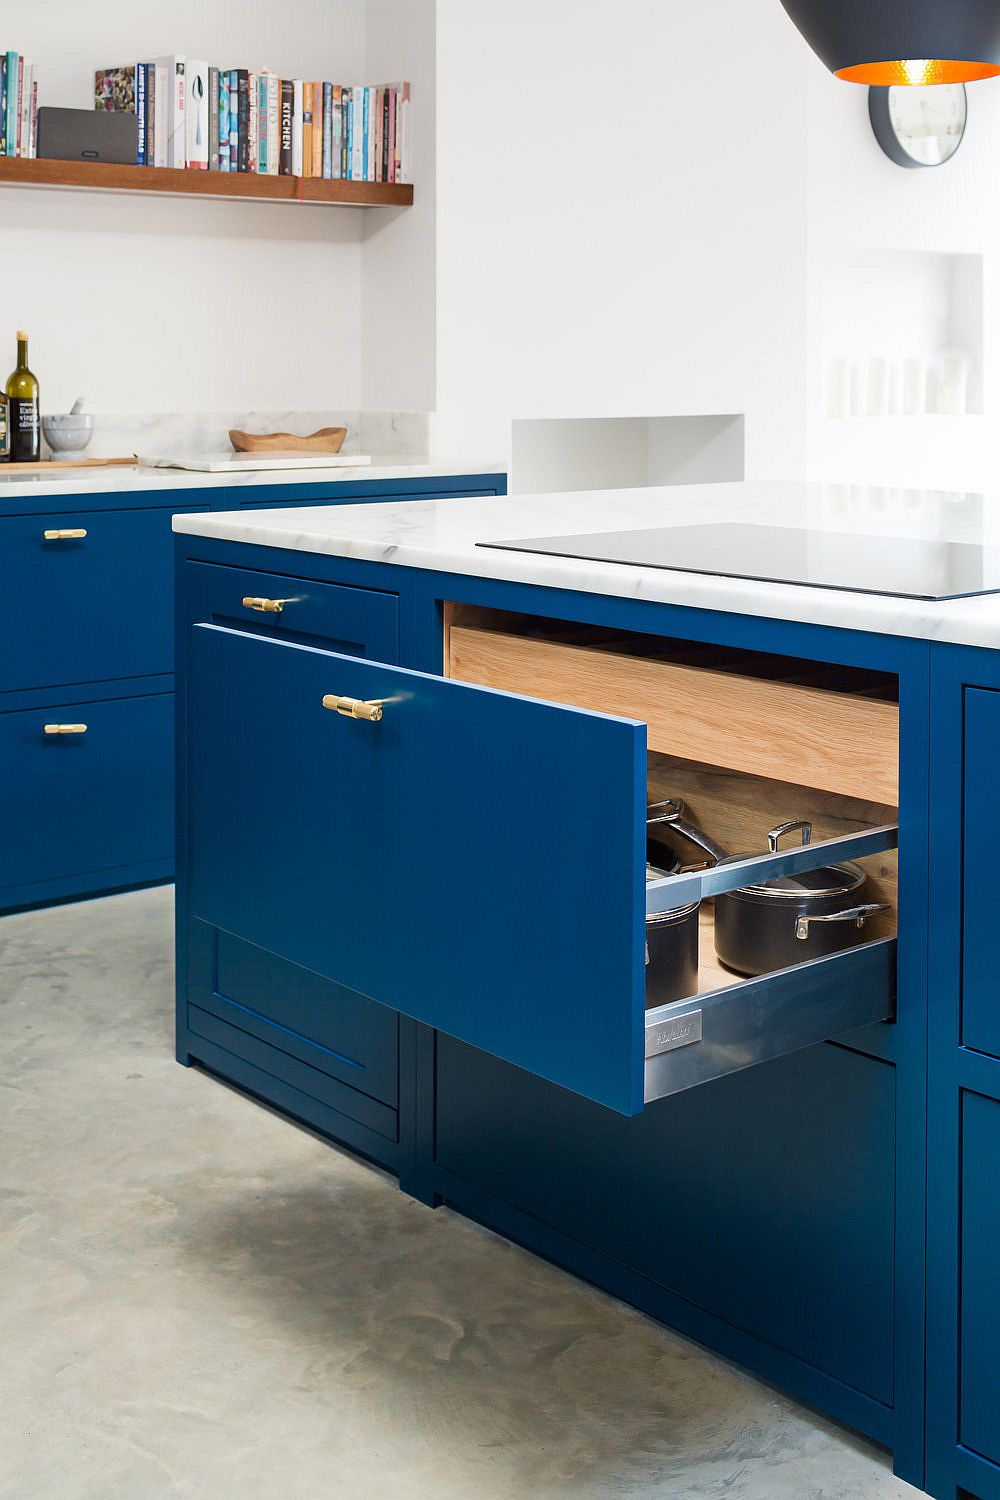 Oak-internals-and-drawer-inserts-bring-smart-storage-to-the-deep-blue-kitchen-island-57467